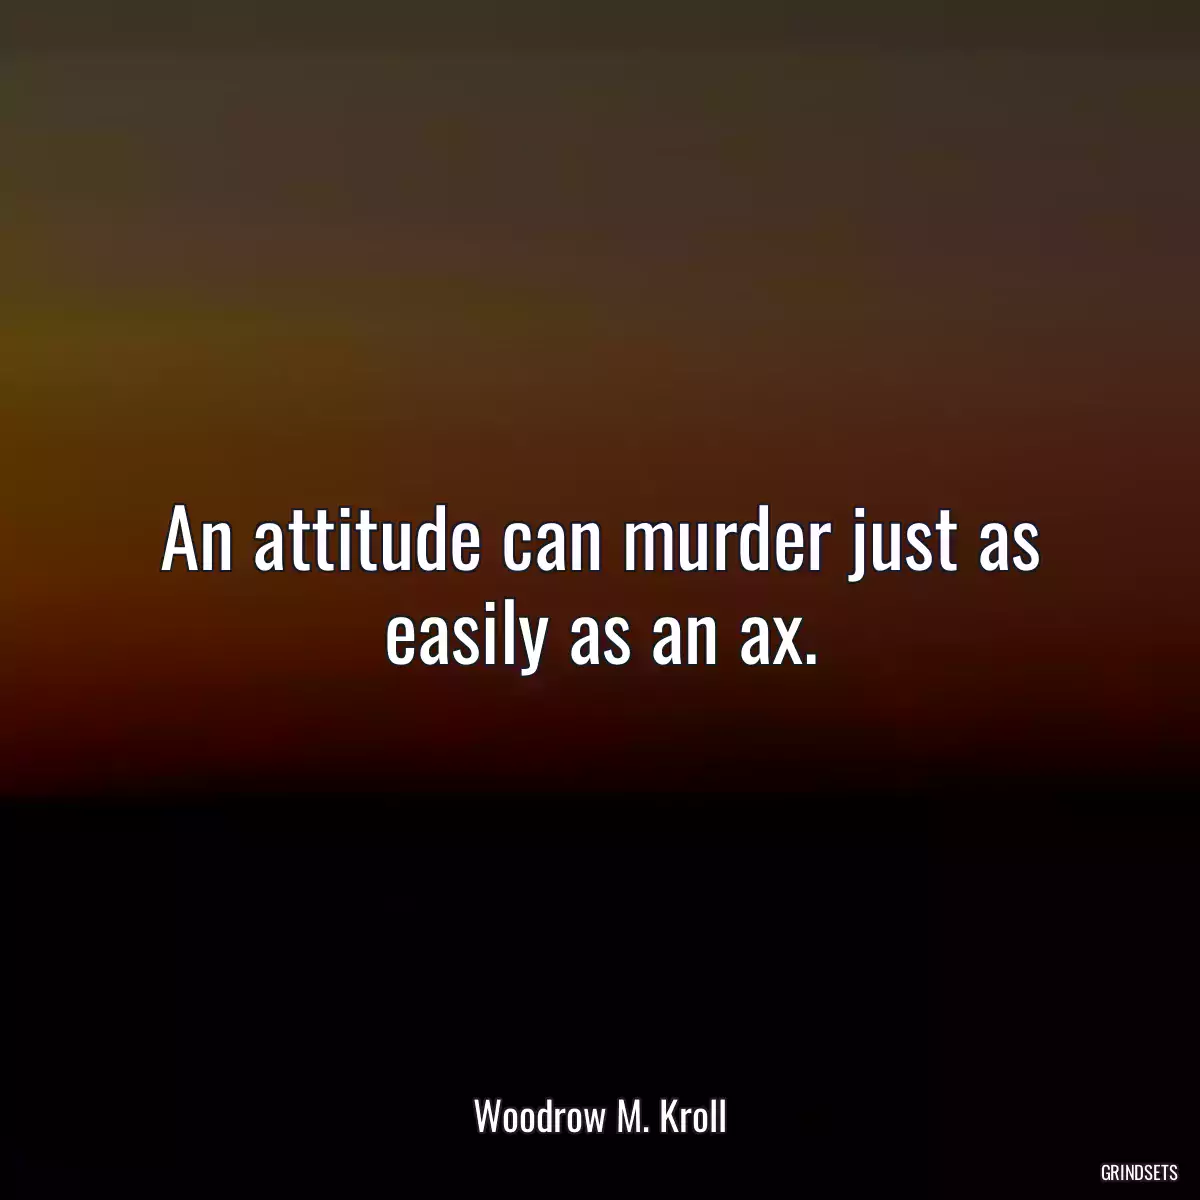 An attitude can murder just as easily as an ax.